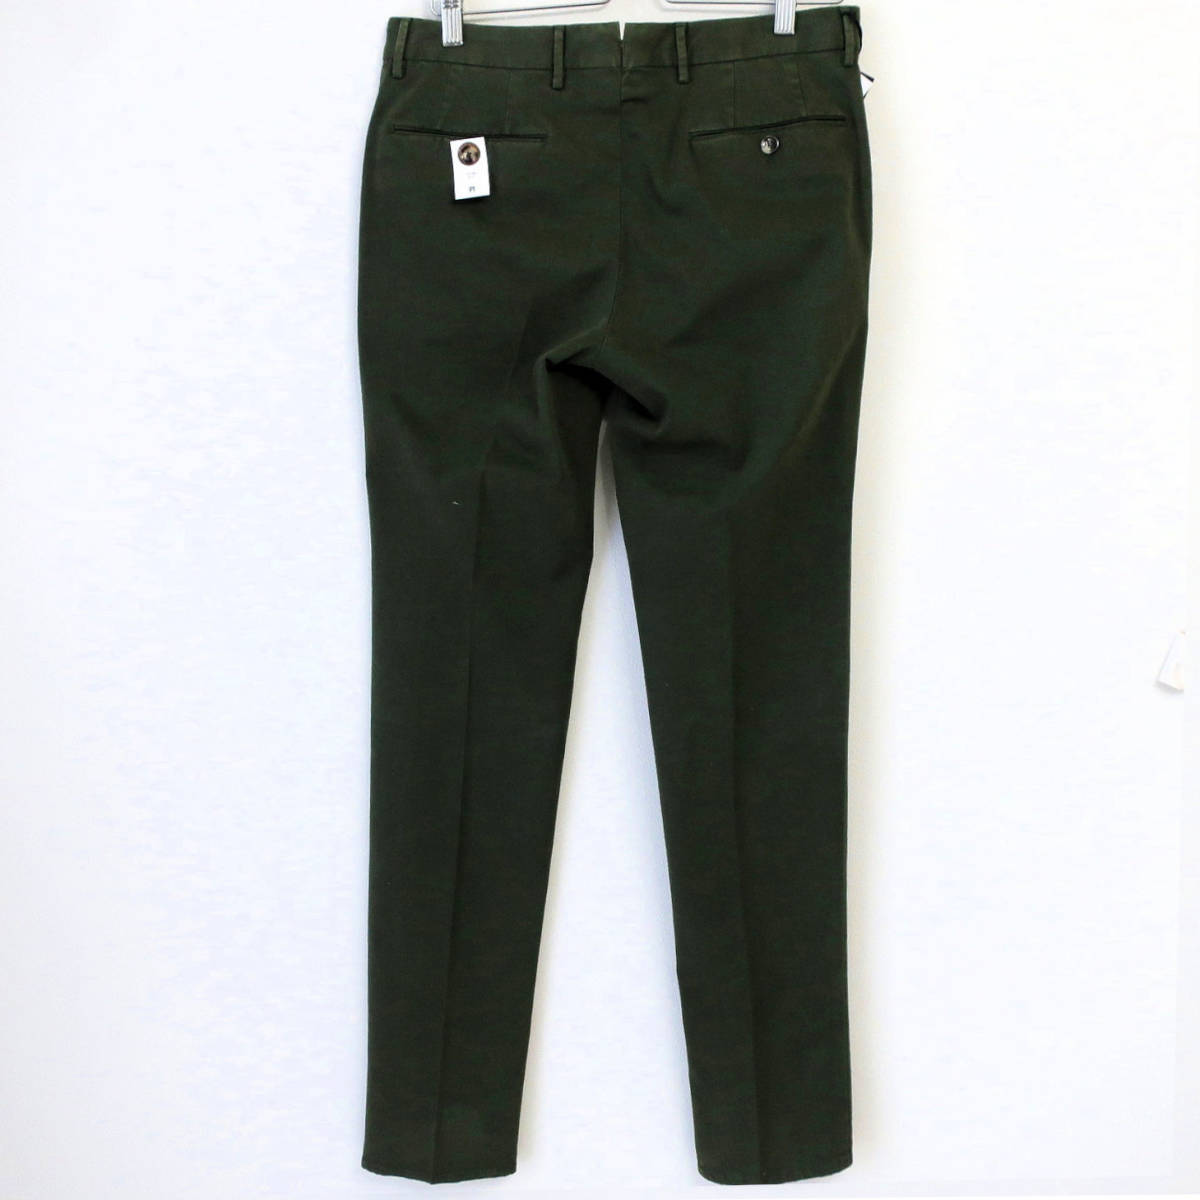  new goods PT TORINO Italian beautiful legs slim thin stretch chinos cotton pants PT01 weave pattern green green men's 54 3XL size unused 